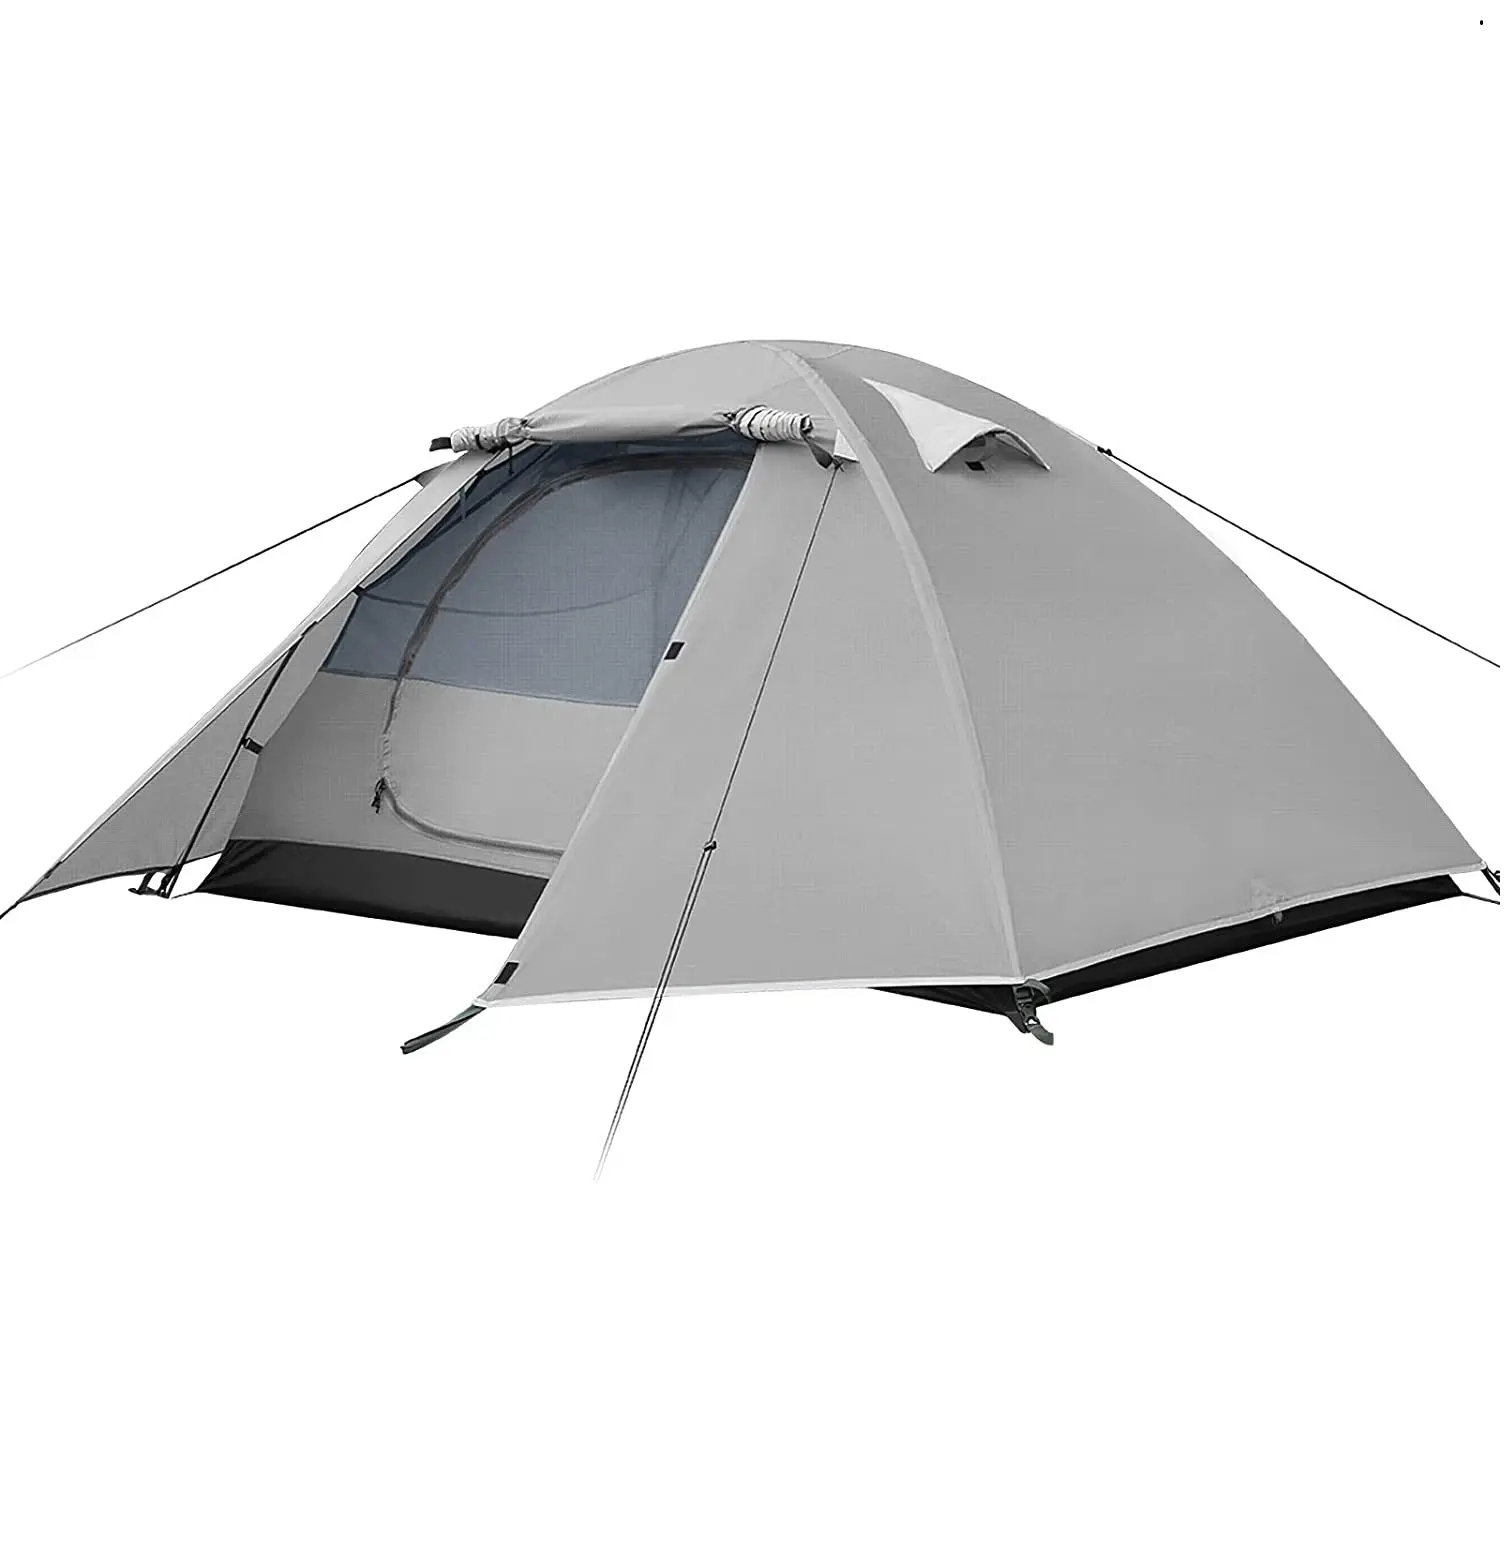 Ultralight tent